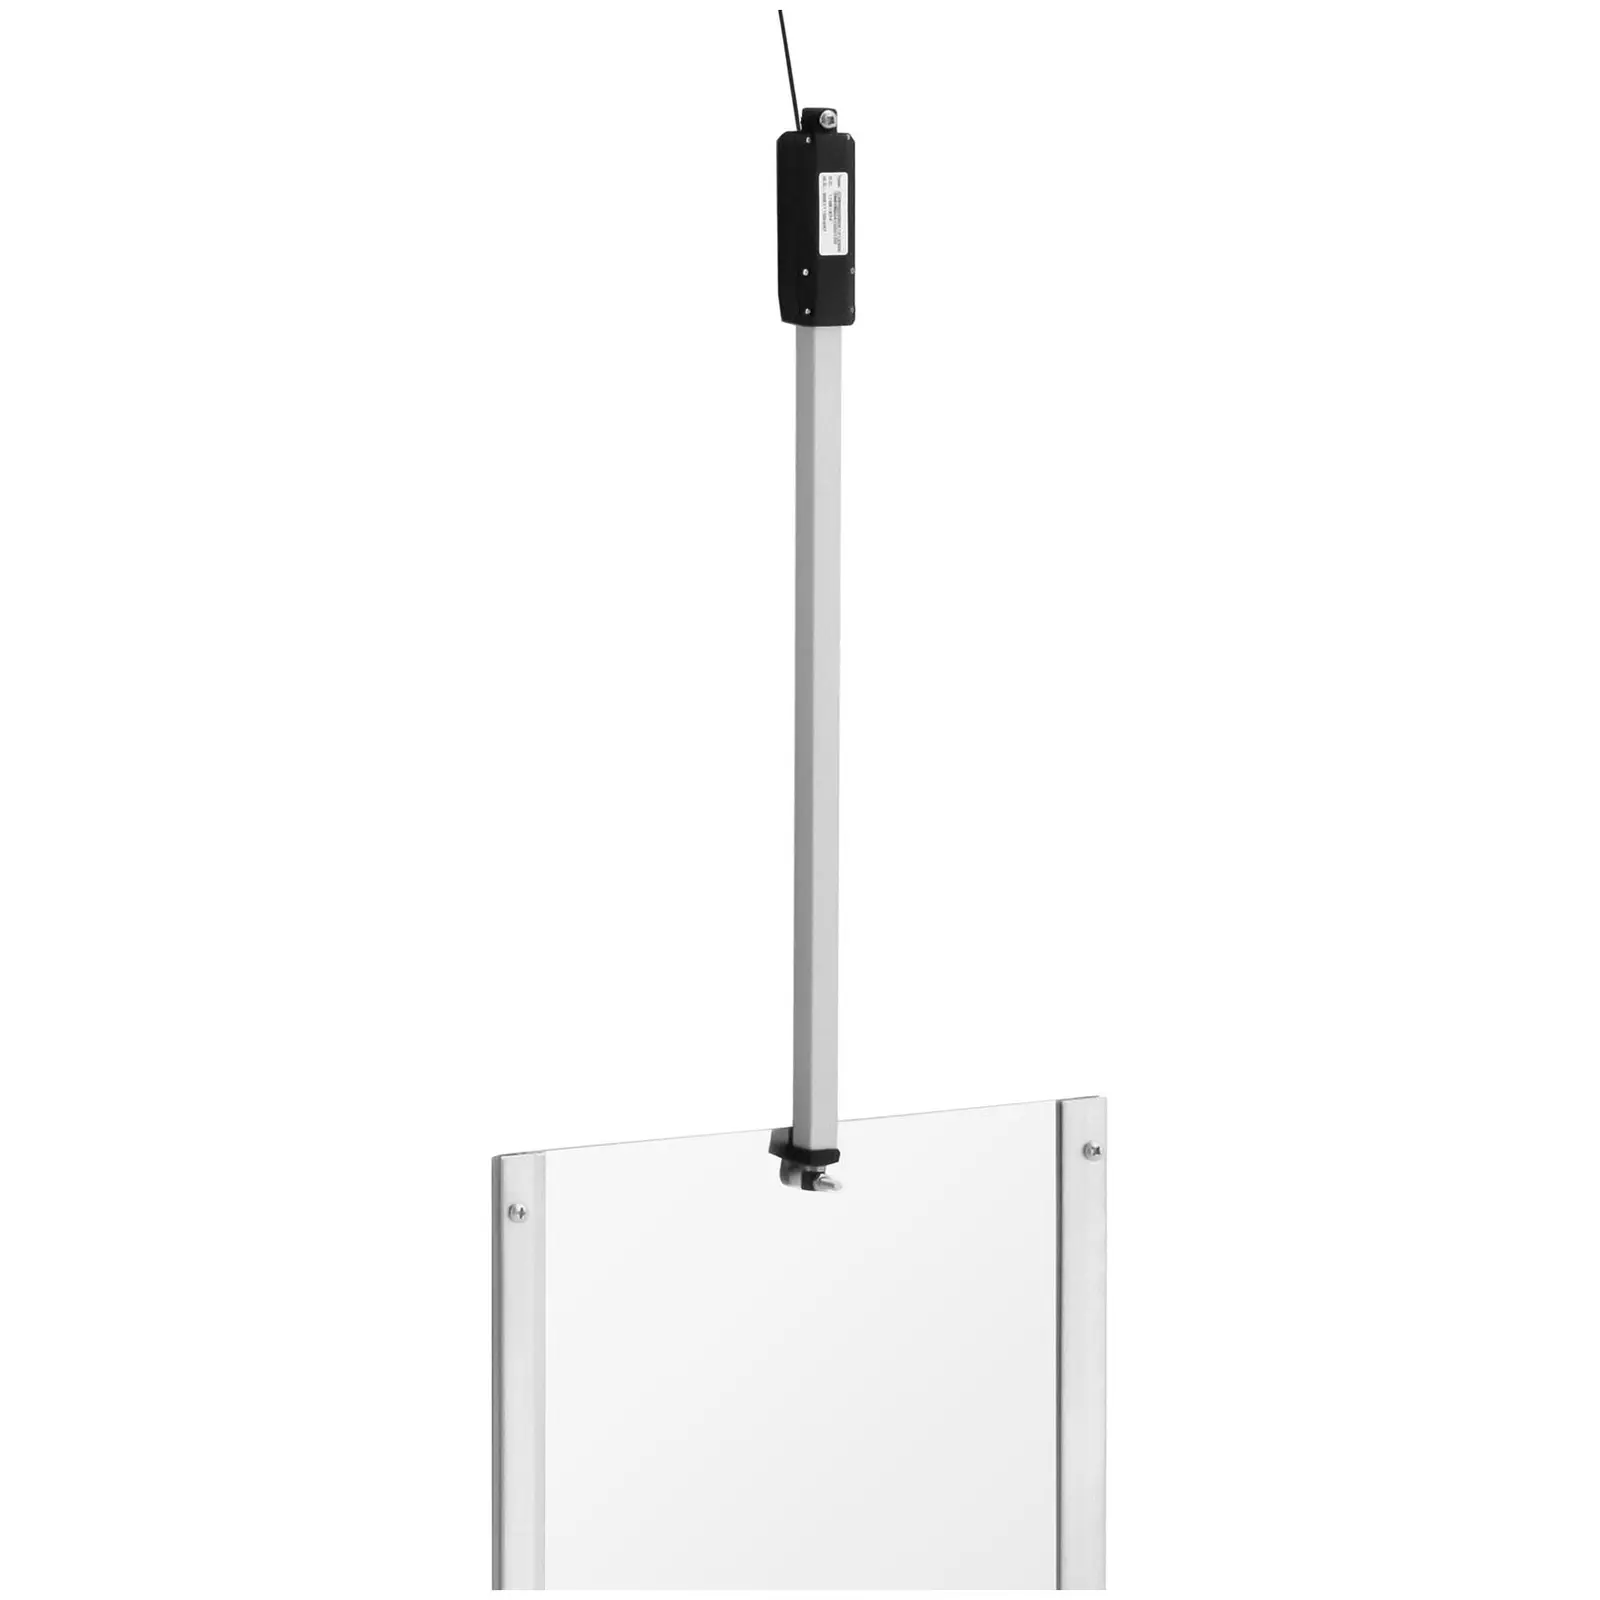 Automatic Chicken Coop Door - timer / light sensor - power supply - waterproof housing - anti-blocking function